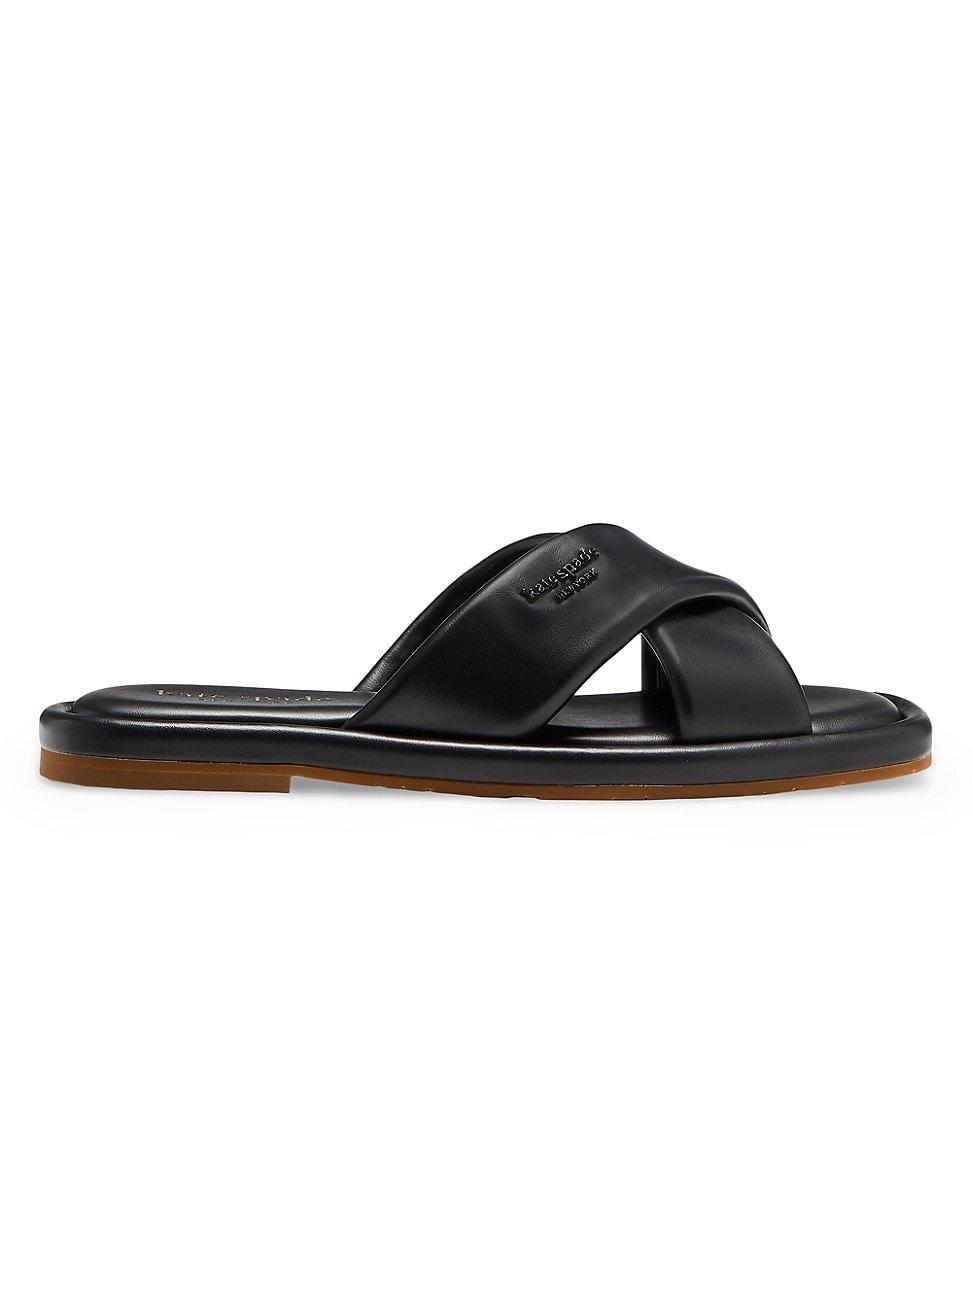 kate spade new york Womens Rio Crisscross Slide Sandals Product Image